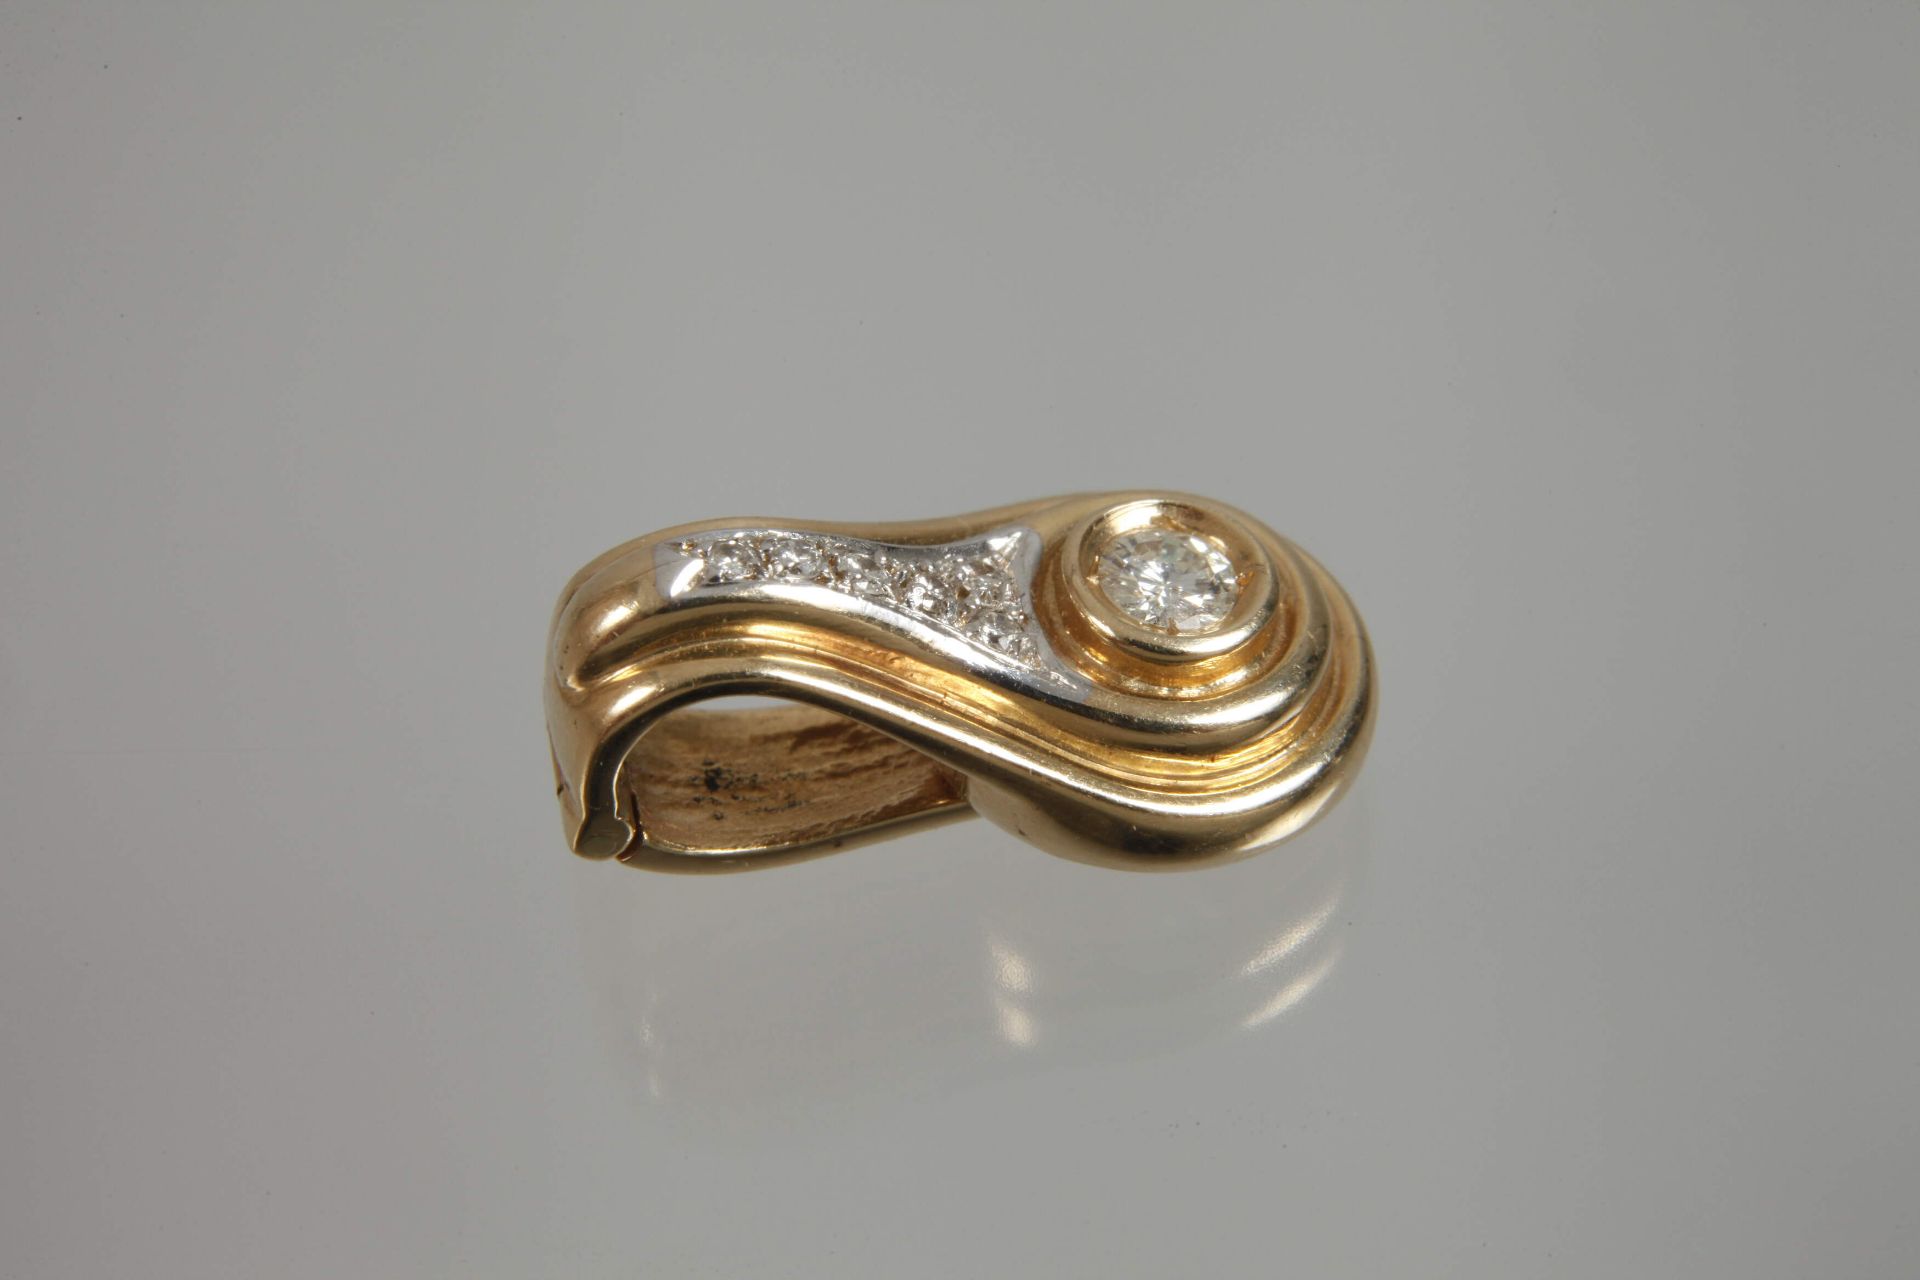 Clip pendant with brilliant-cut diamonds - Image 3 of 3